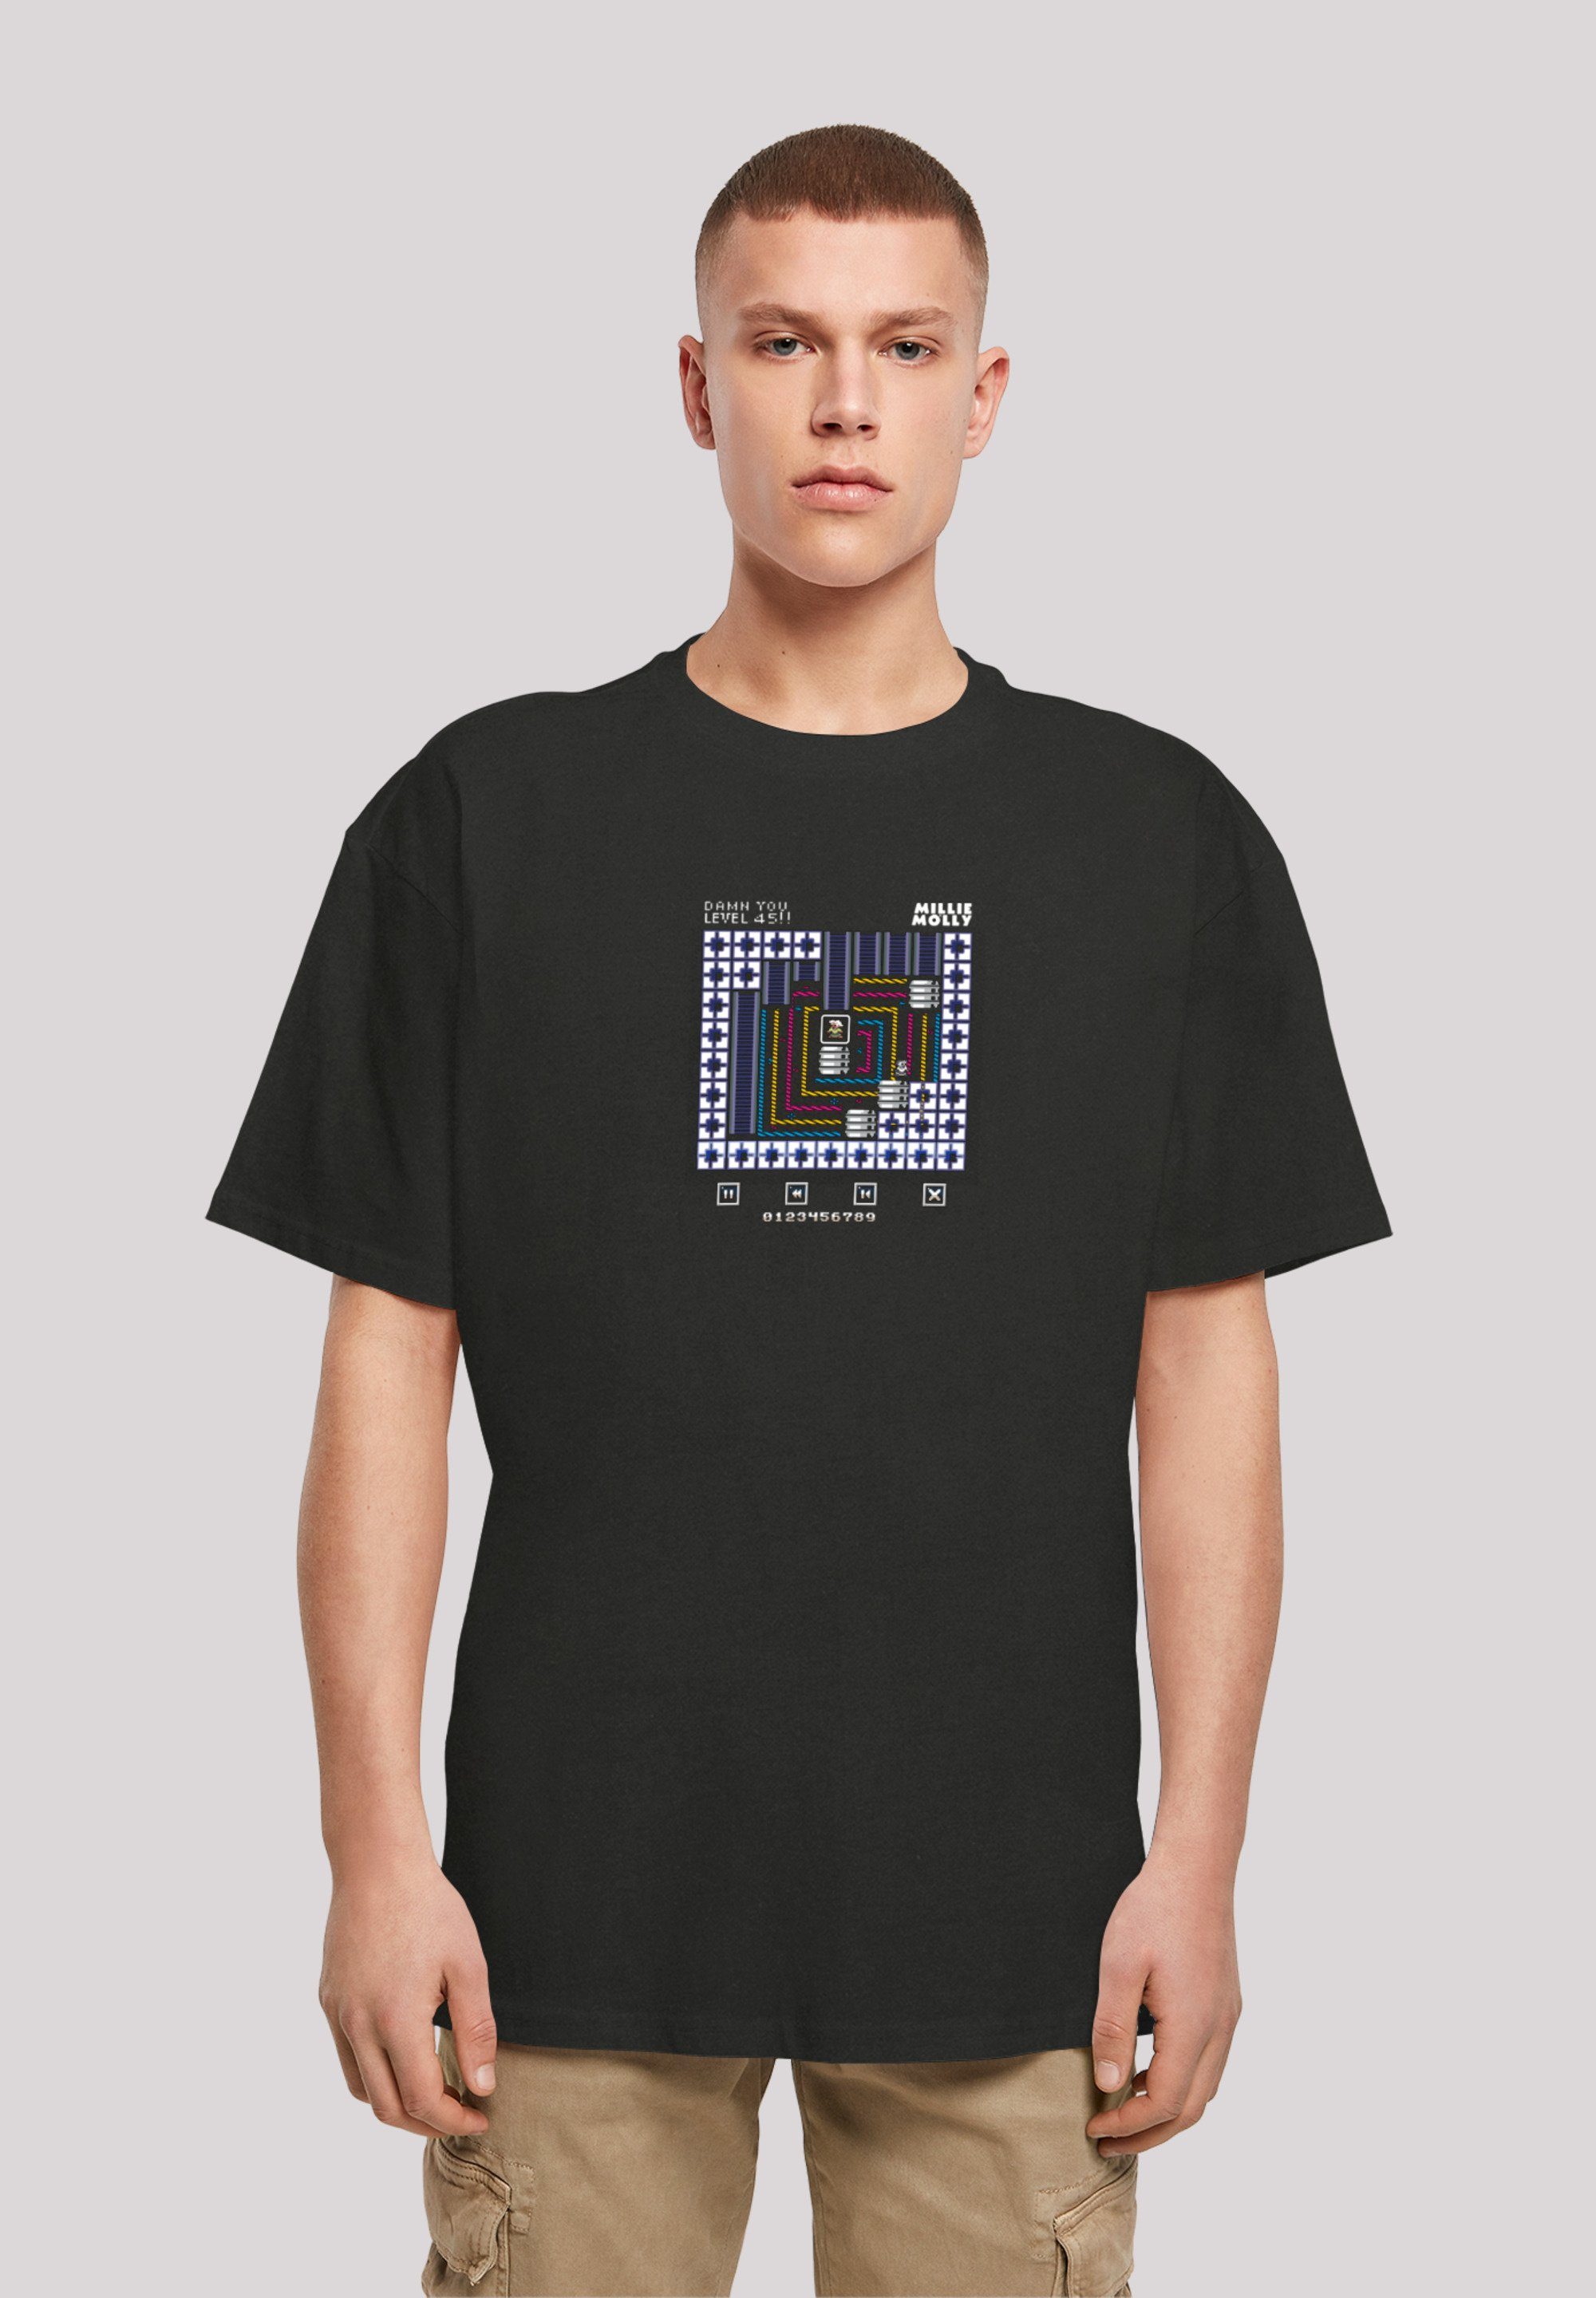 F4NT4STIC T-Shirt Level 45 Millie Mollie C64 Retro Gaming SEVENSQUARED Print schwarz